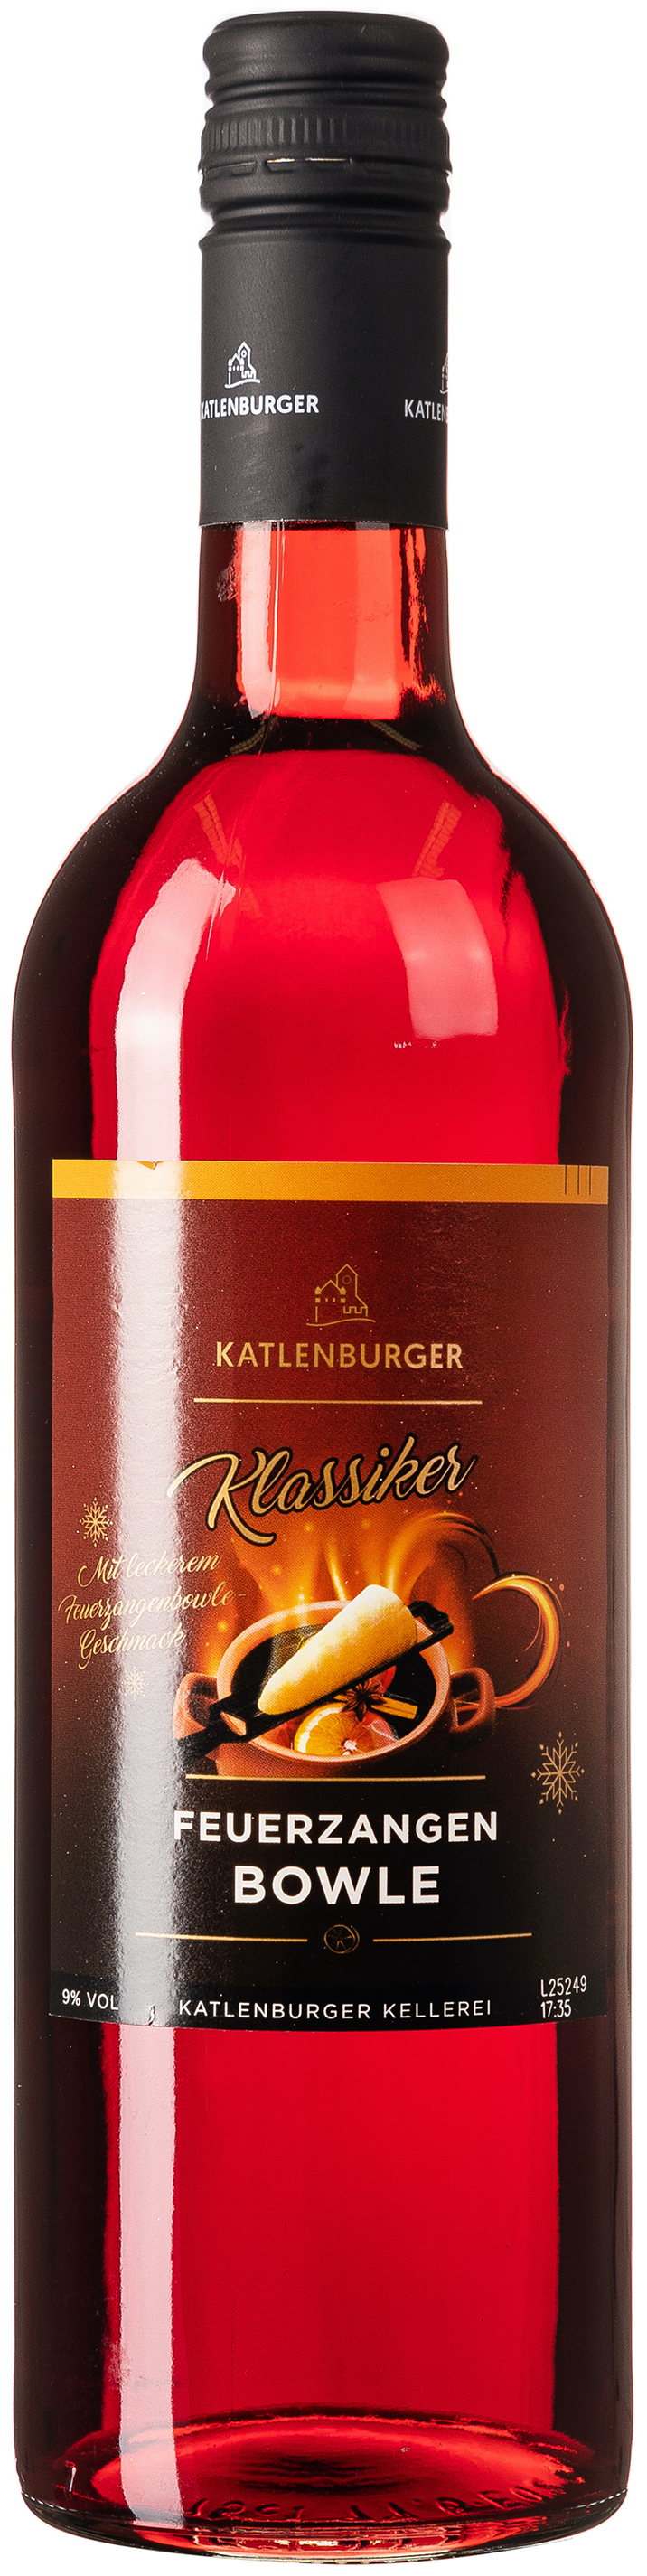 Katlenburger Feuerzangen Bowle 9% vol. 0,75L